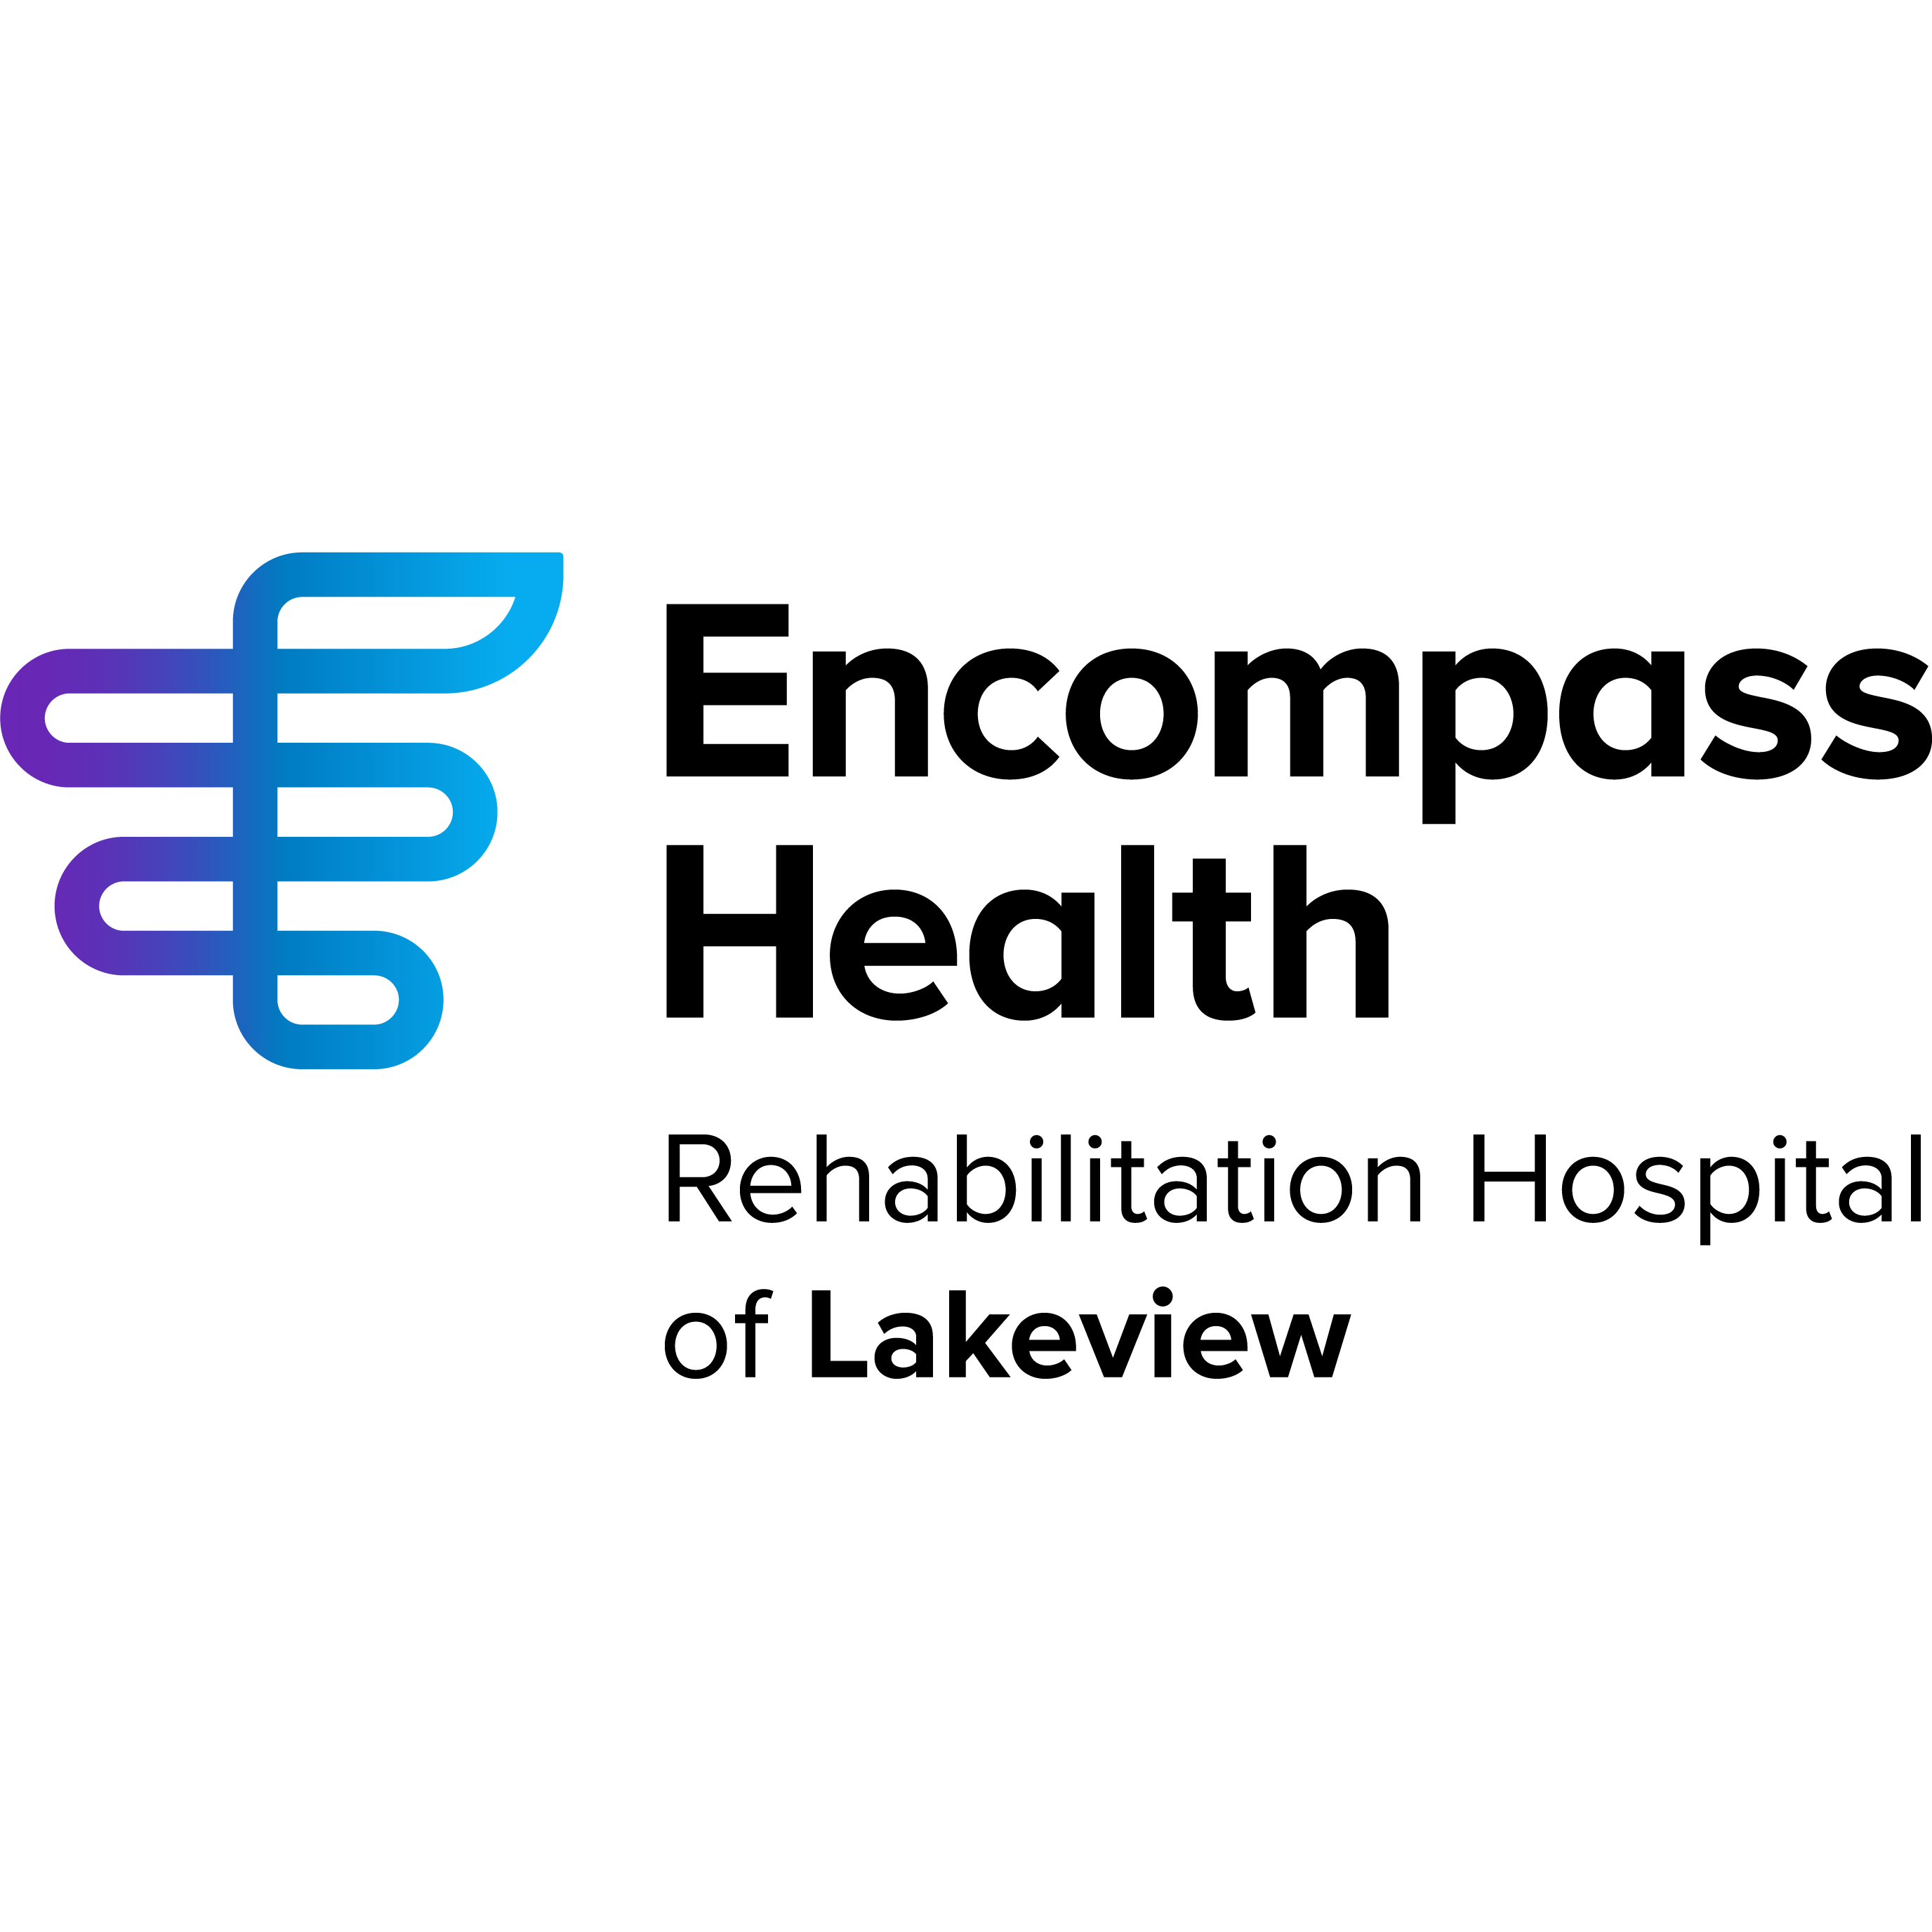 Encompass Health Rehabilitation Hospital of Lakeview